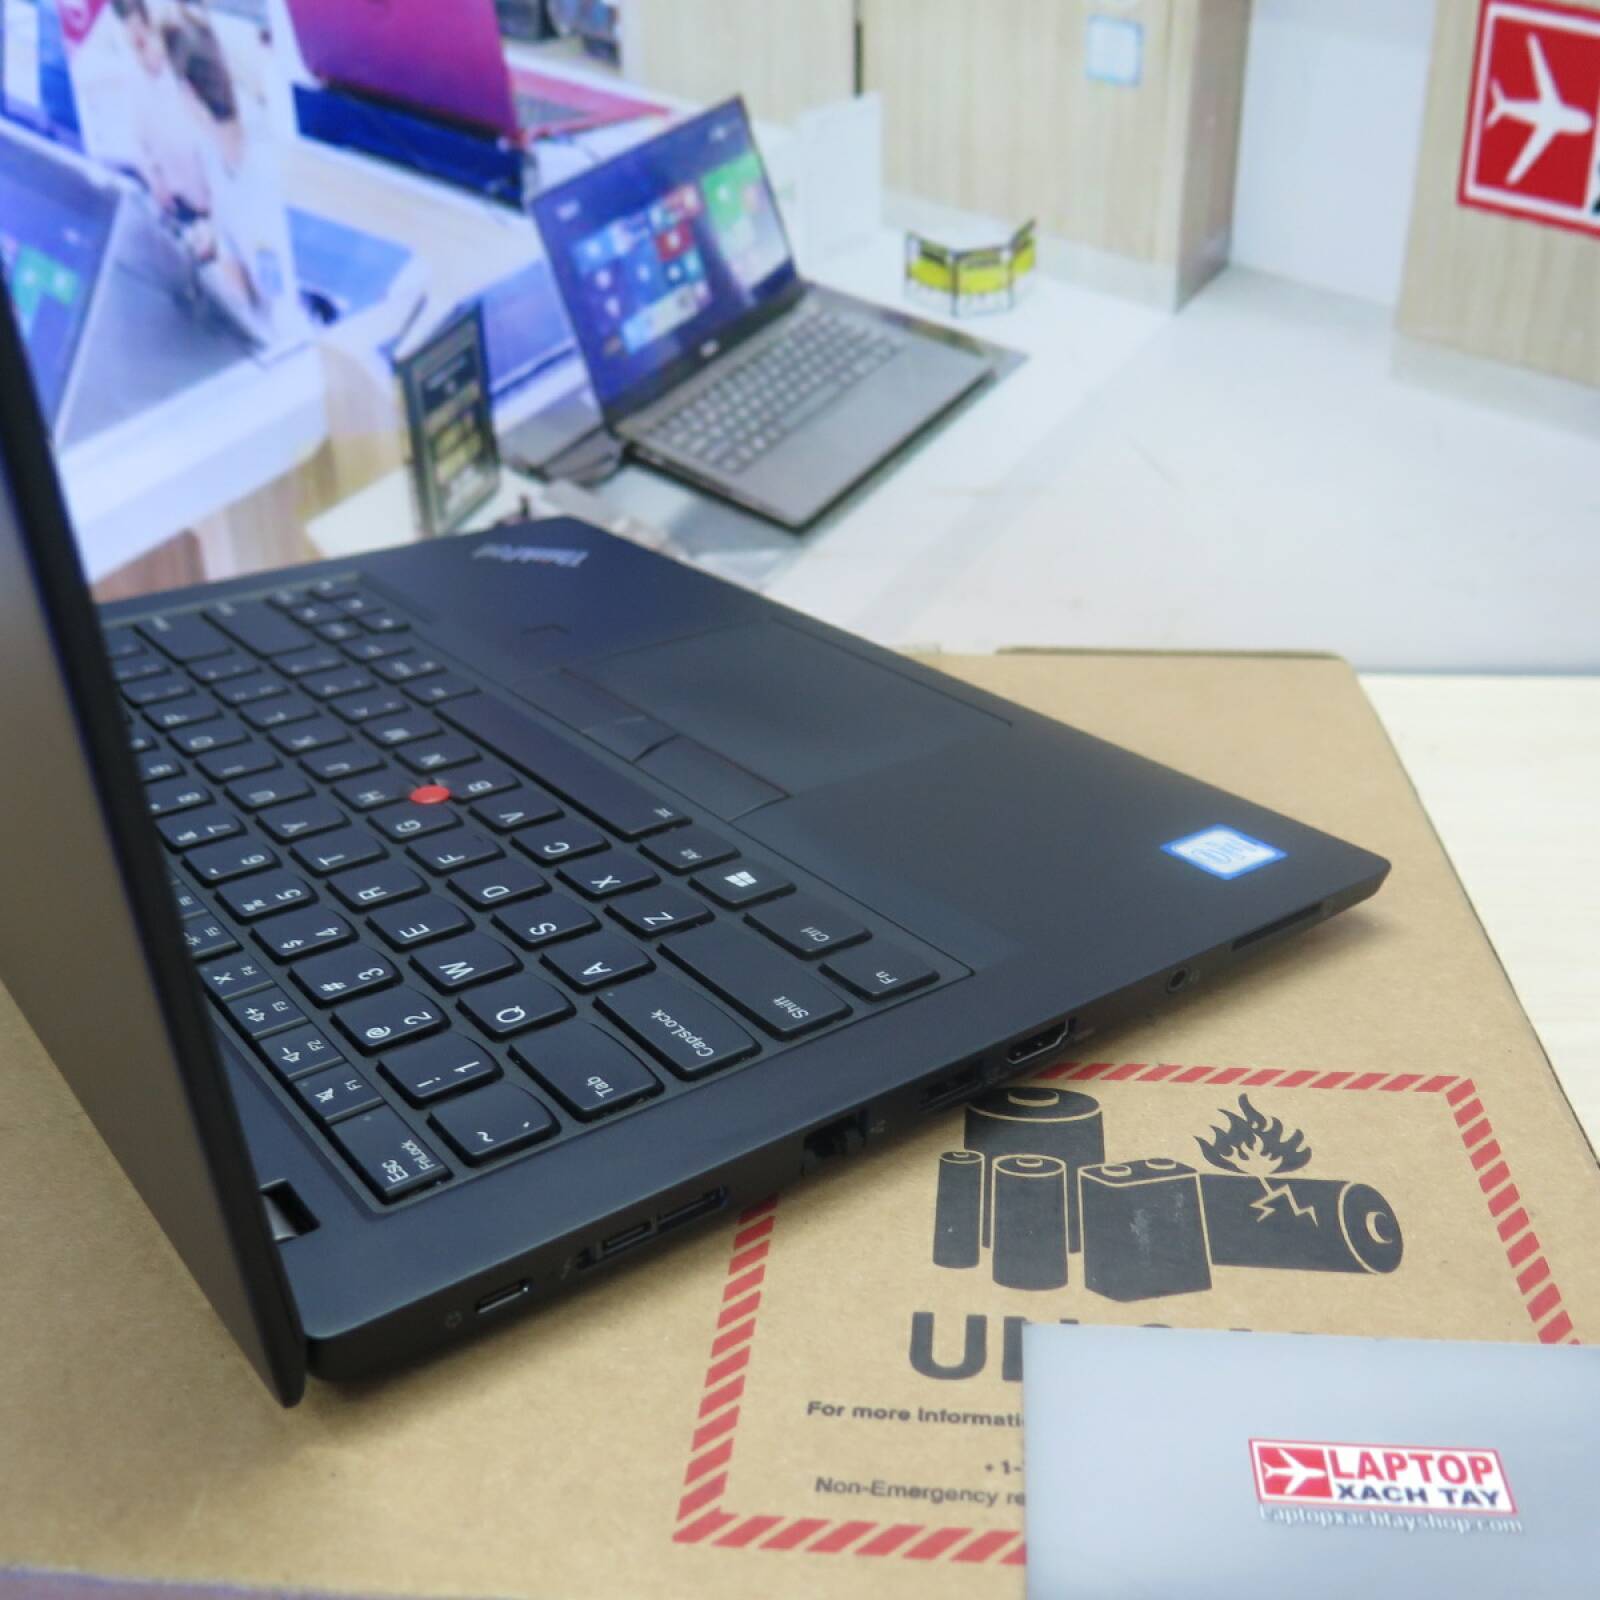 Lenovo Thinkpad T480S tại Laptopxachtayshop.com